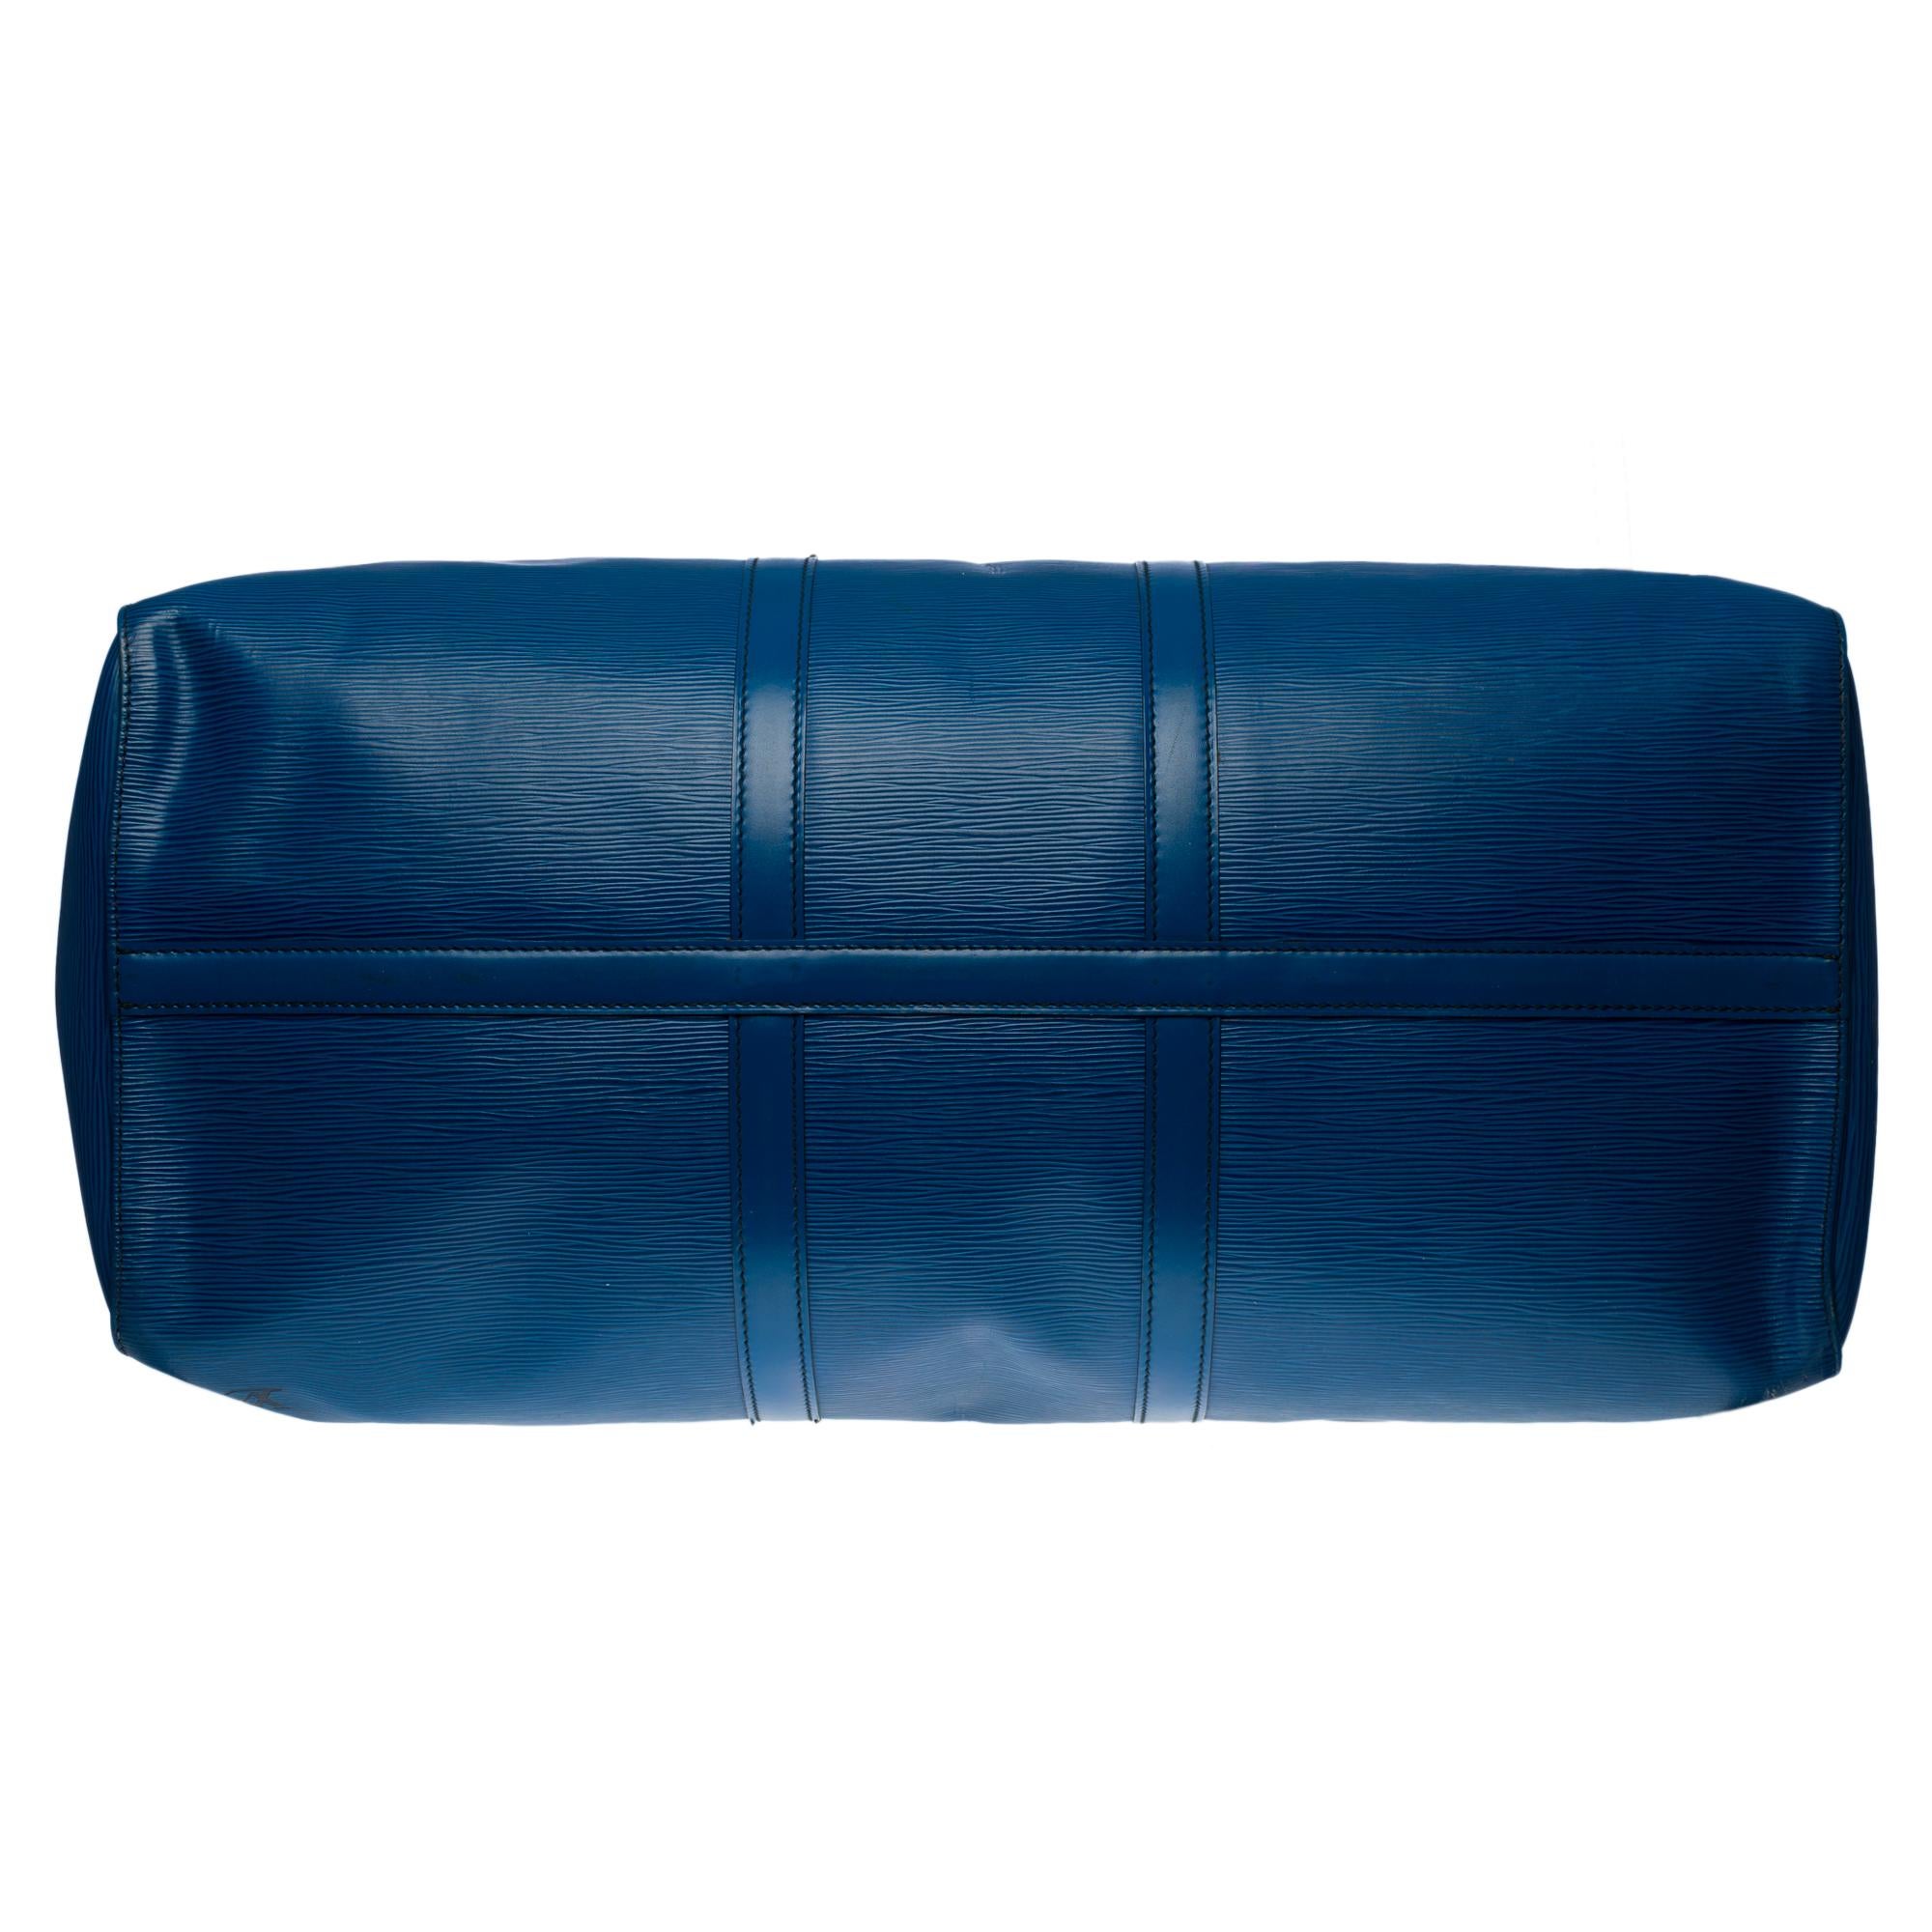 Women's or Men's Very Chic Louis Vuitton Keepall 55 Travel bag in Bleu Cobalt epi leather